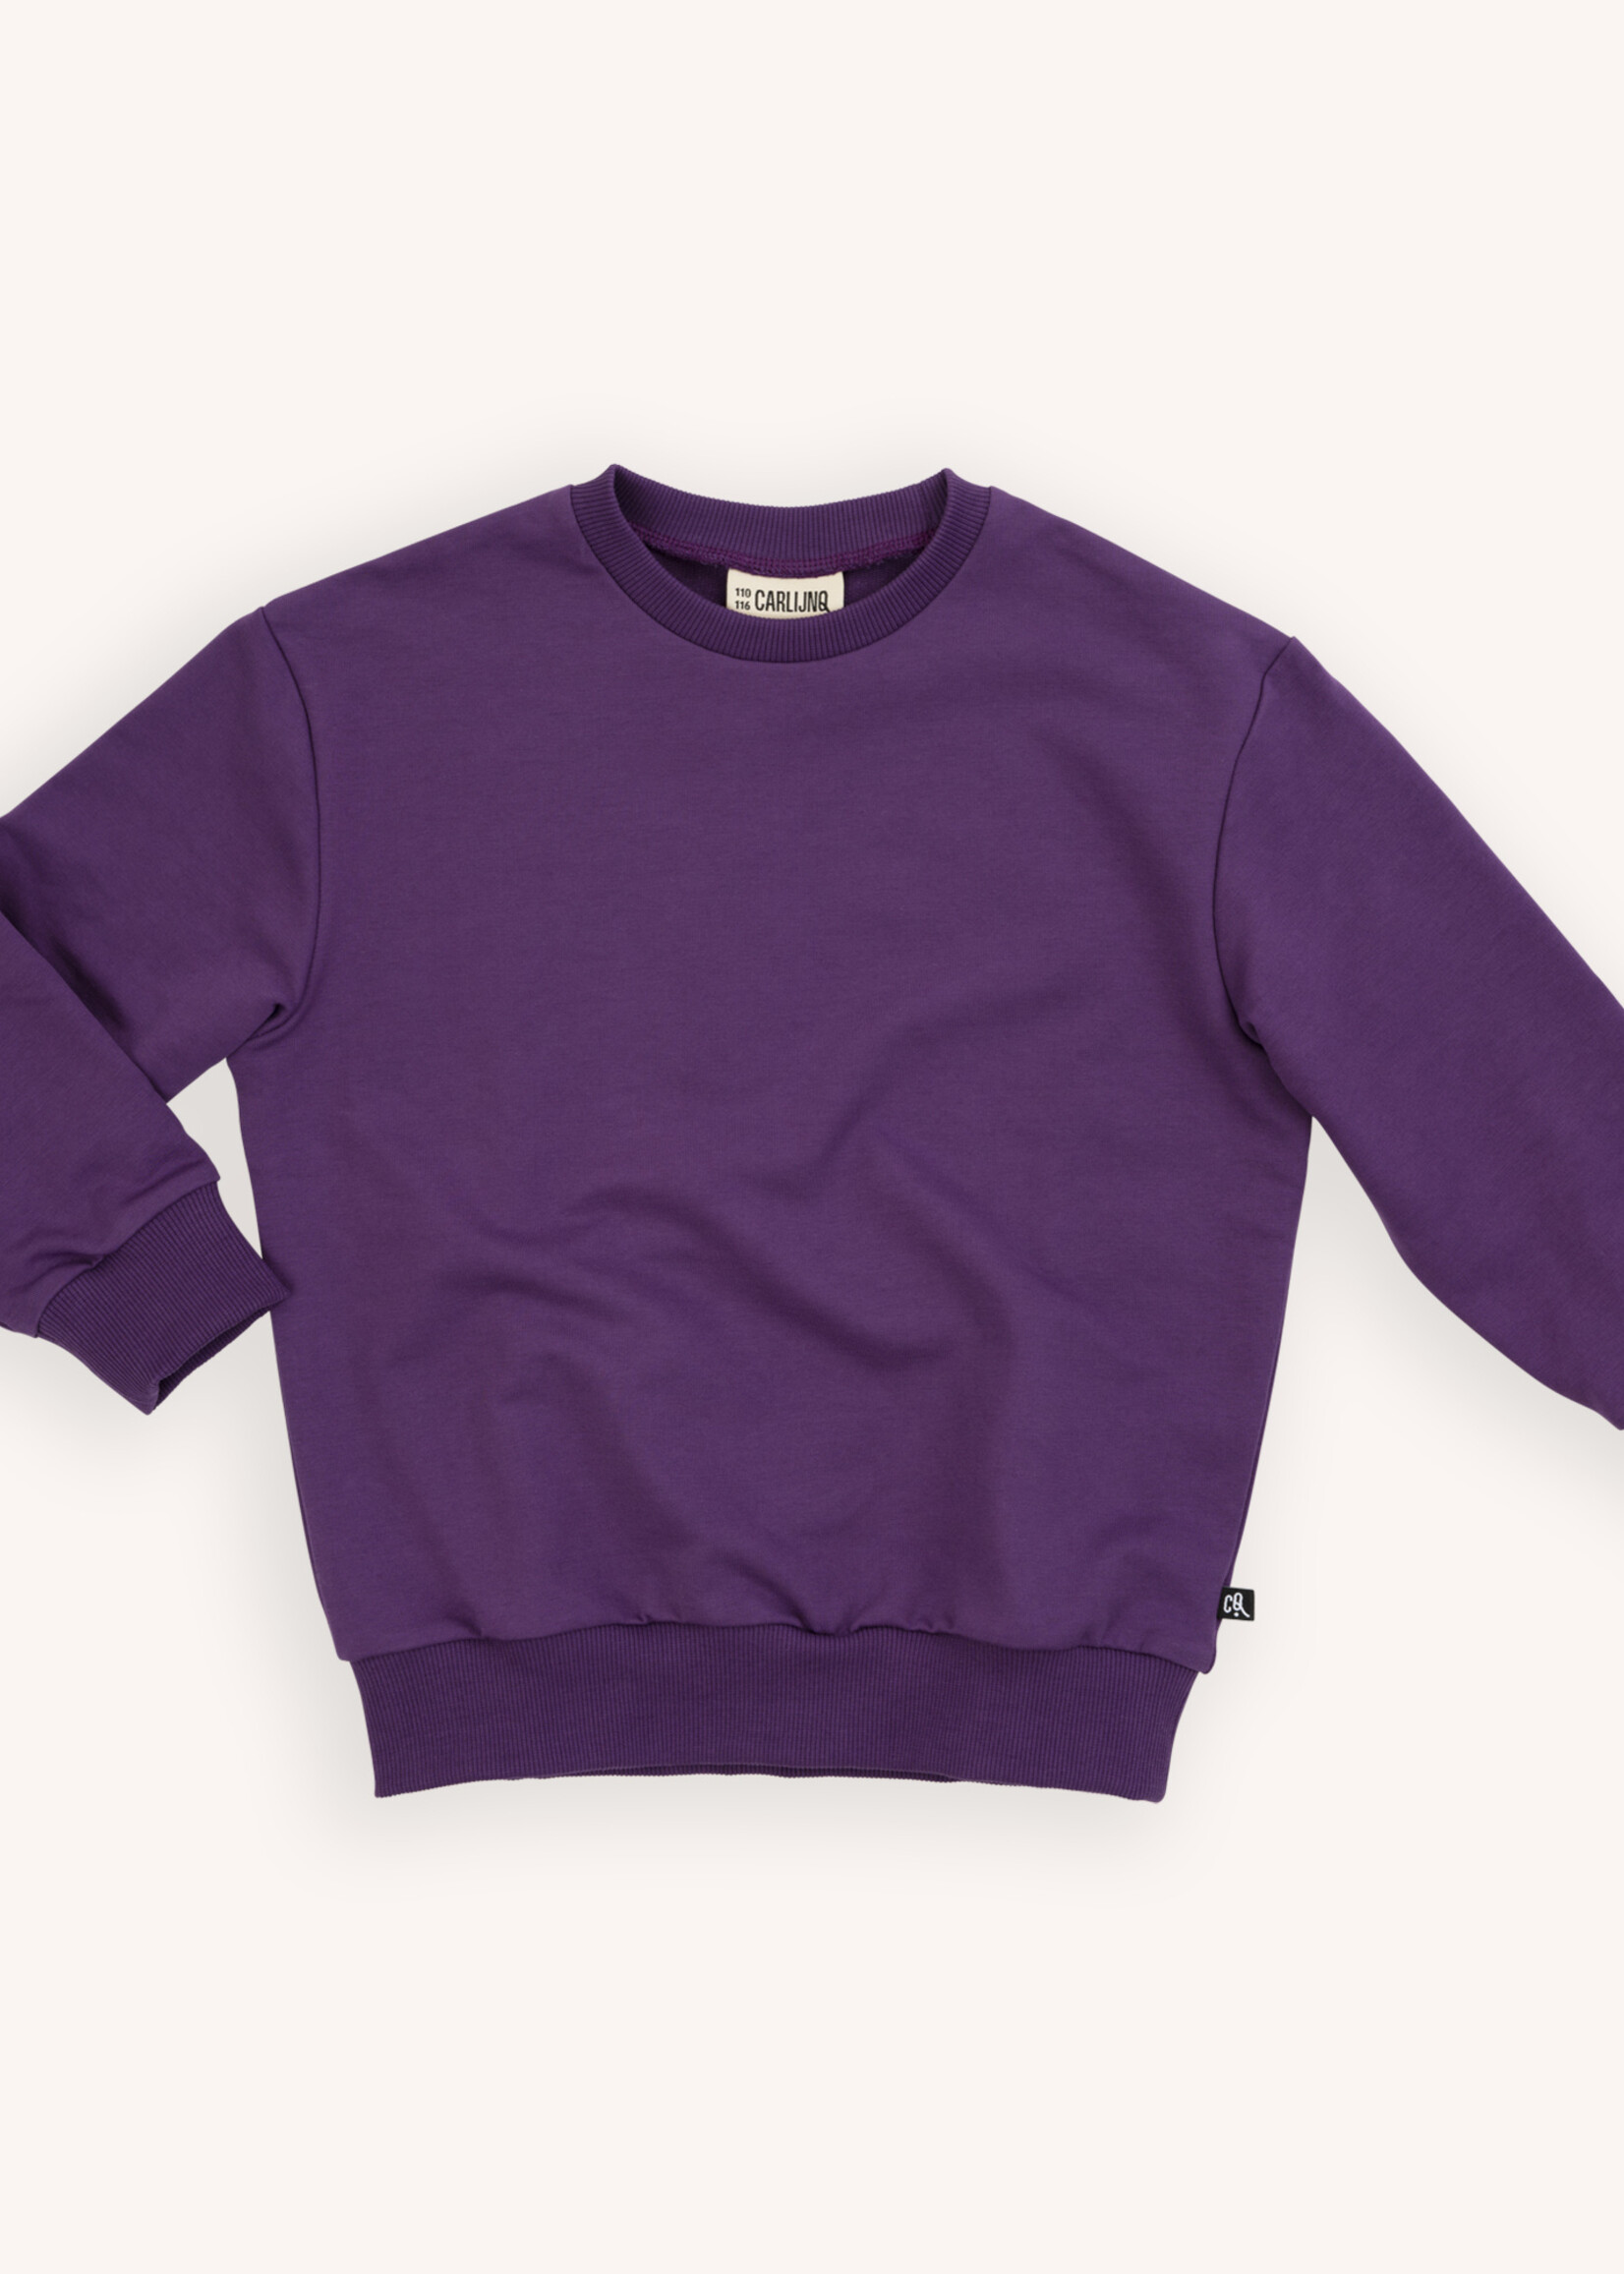 CarlijnQ Dahlia - sweater with print